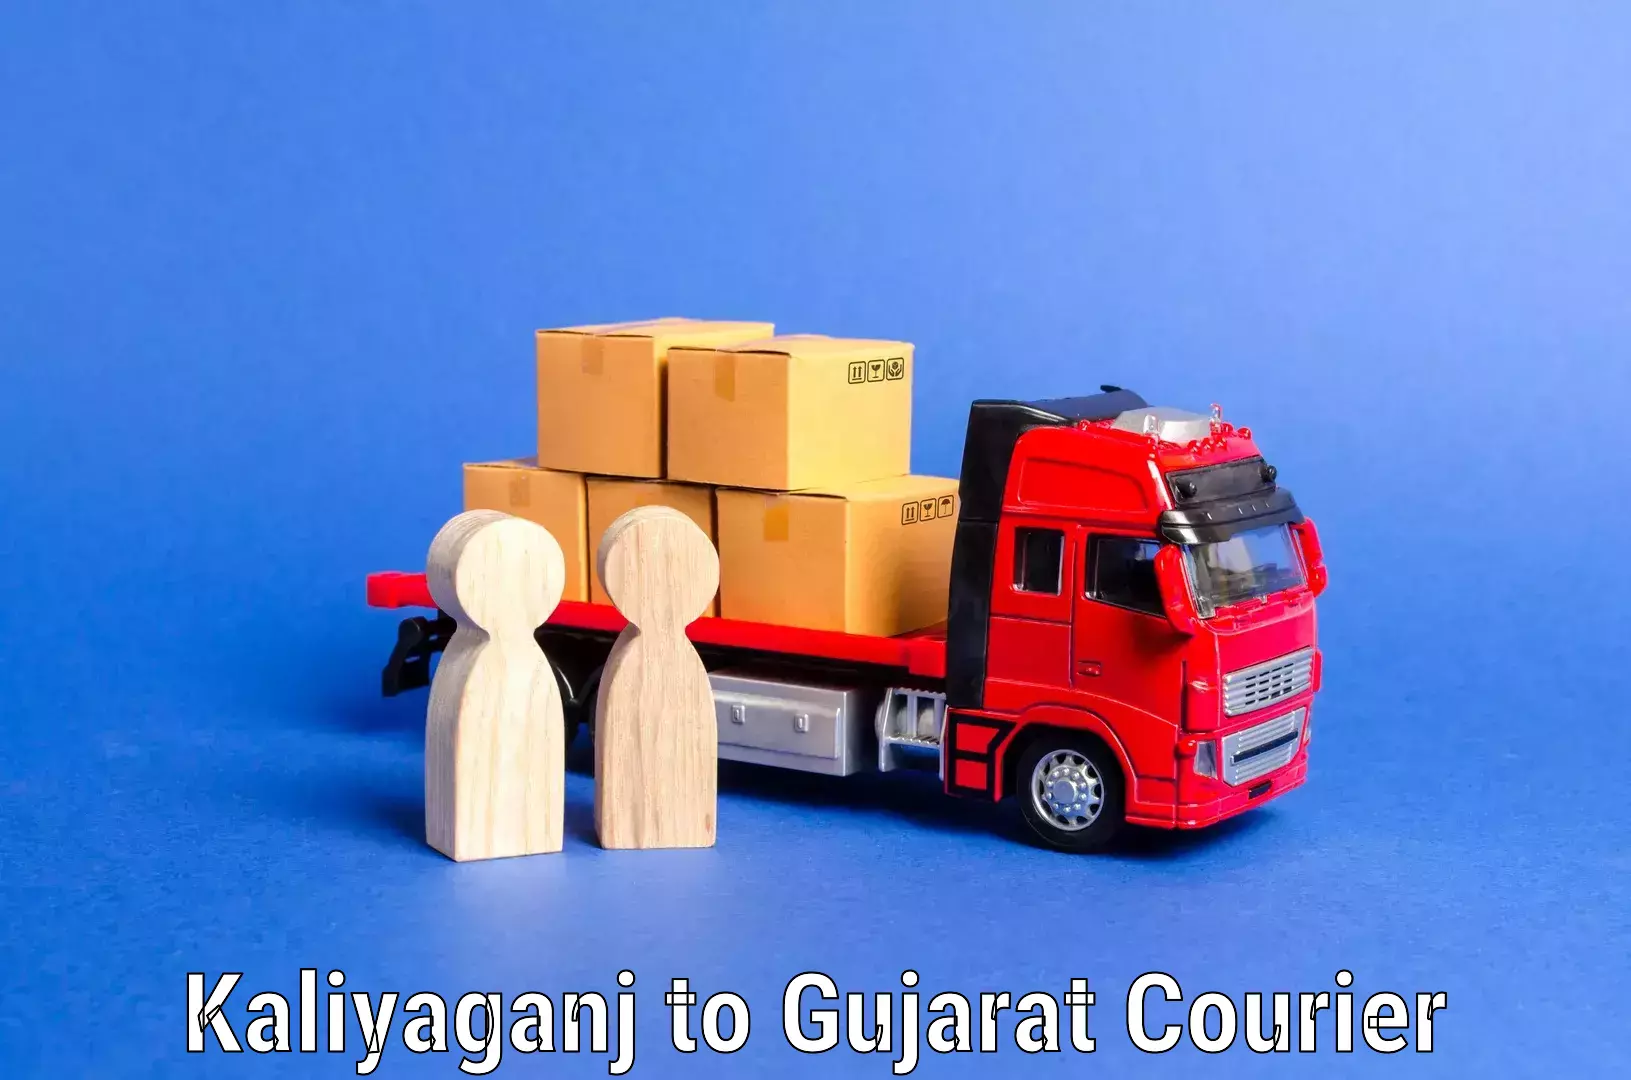 Professional movers and packers Kaliyaganj to Gujarat